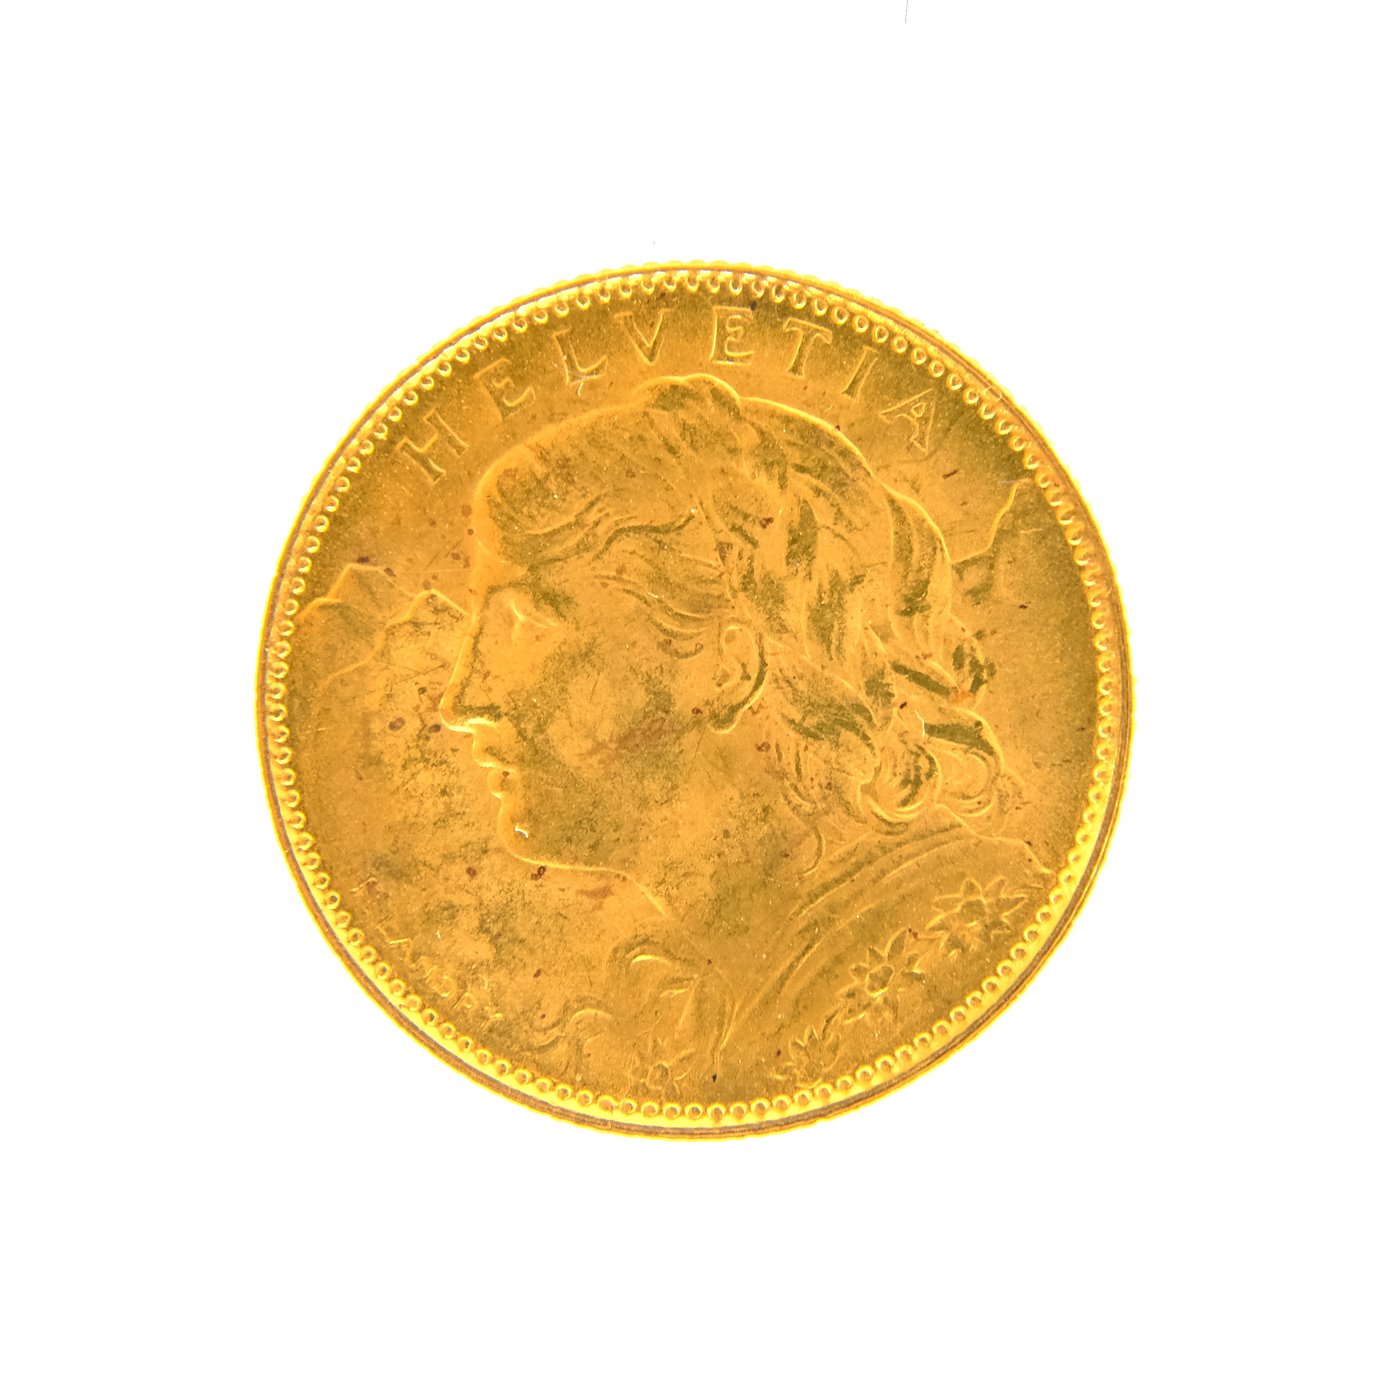 .. - Švýcarsko zlatý 10 frank VRENELI 1922, zlato 900/1000, hrubá hmotnost 3,22g